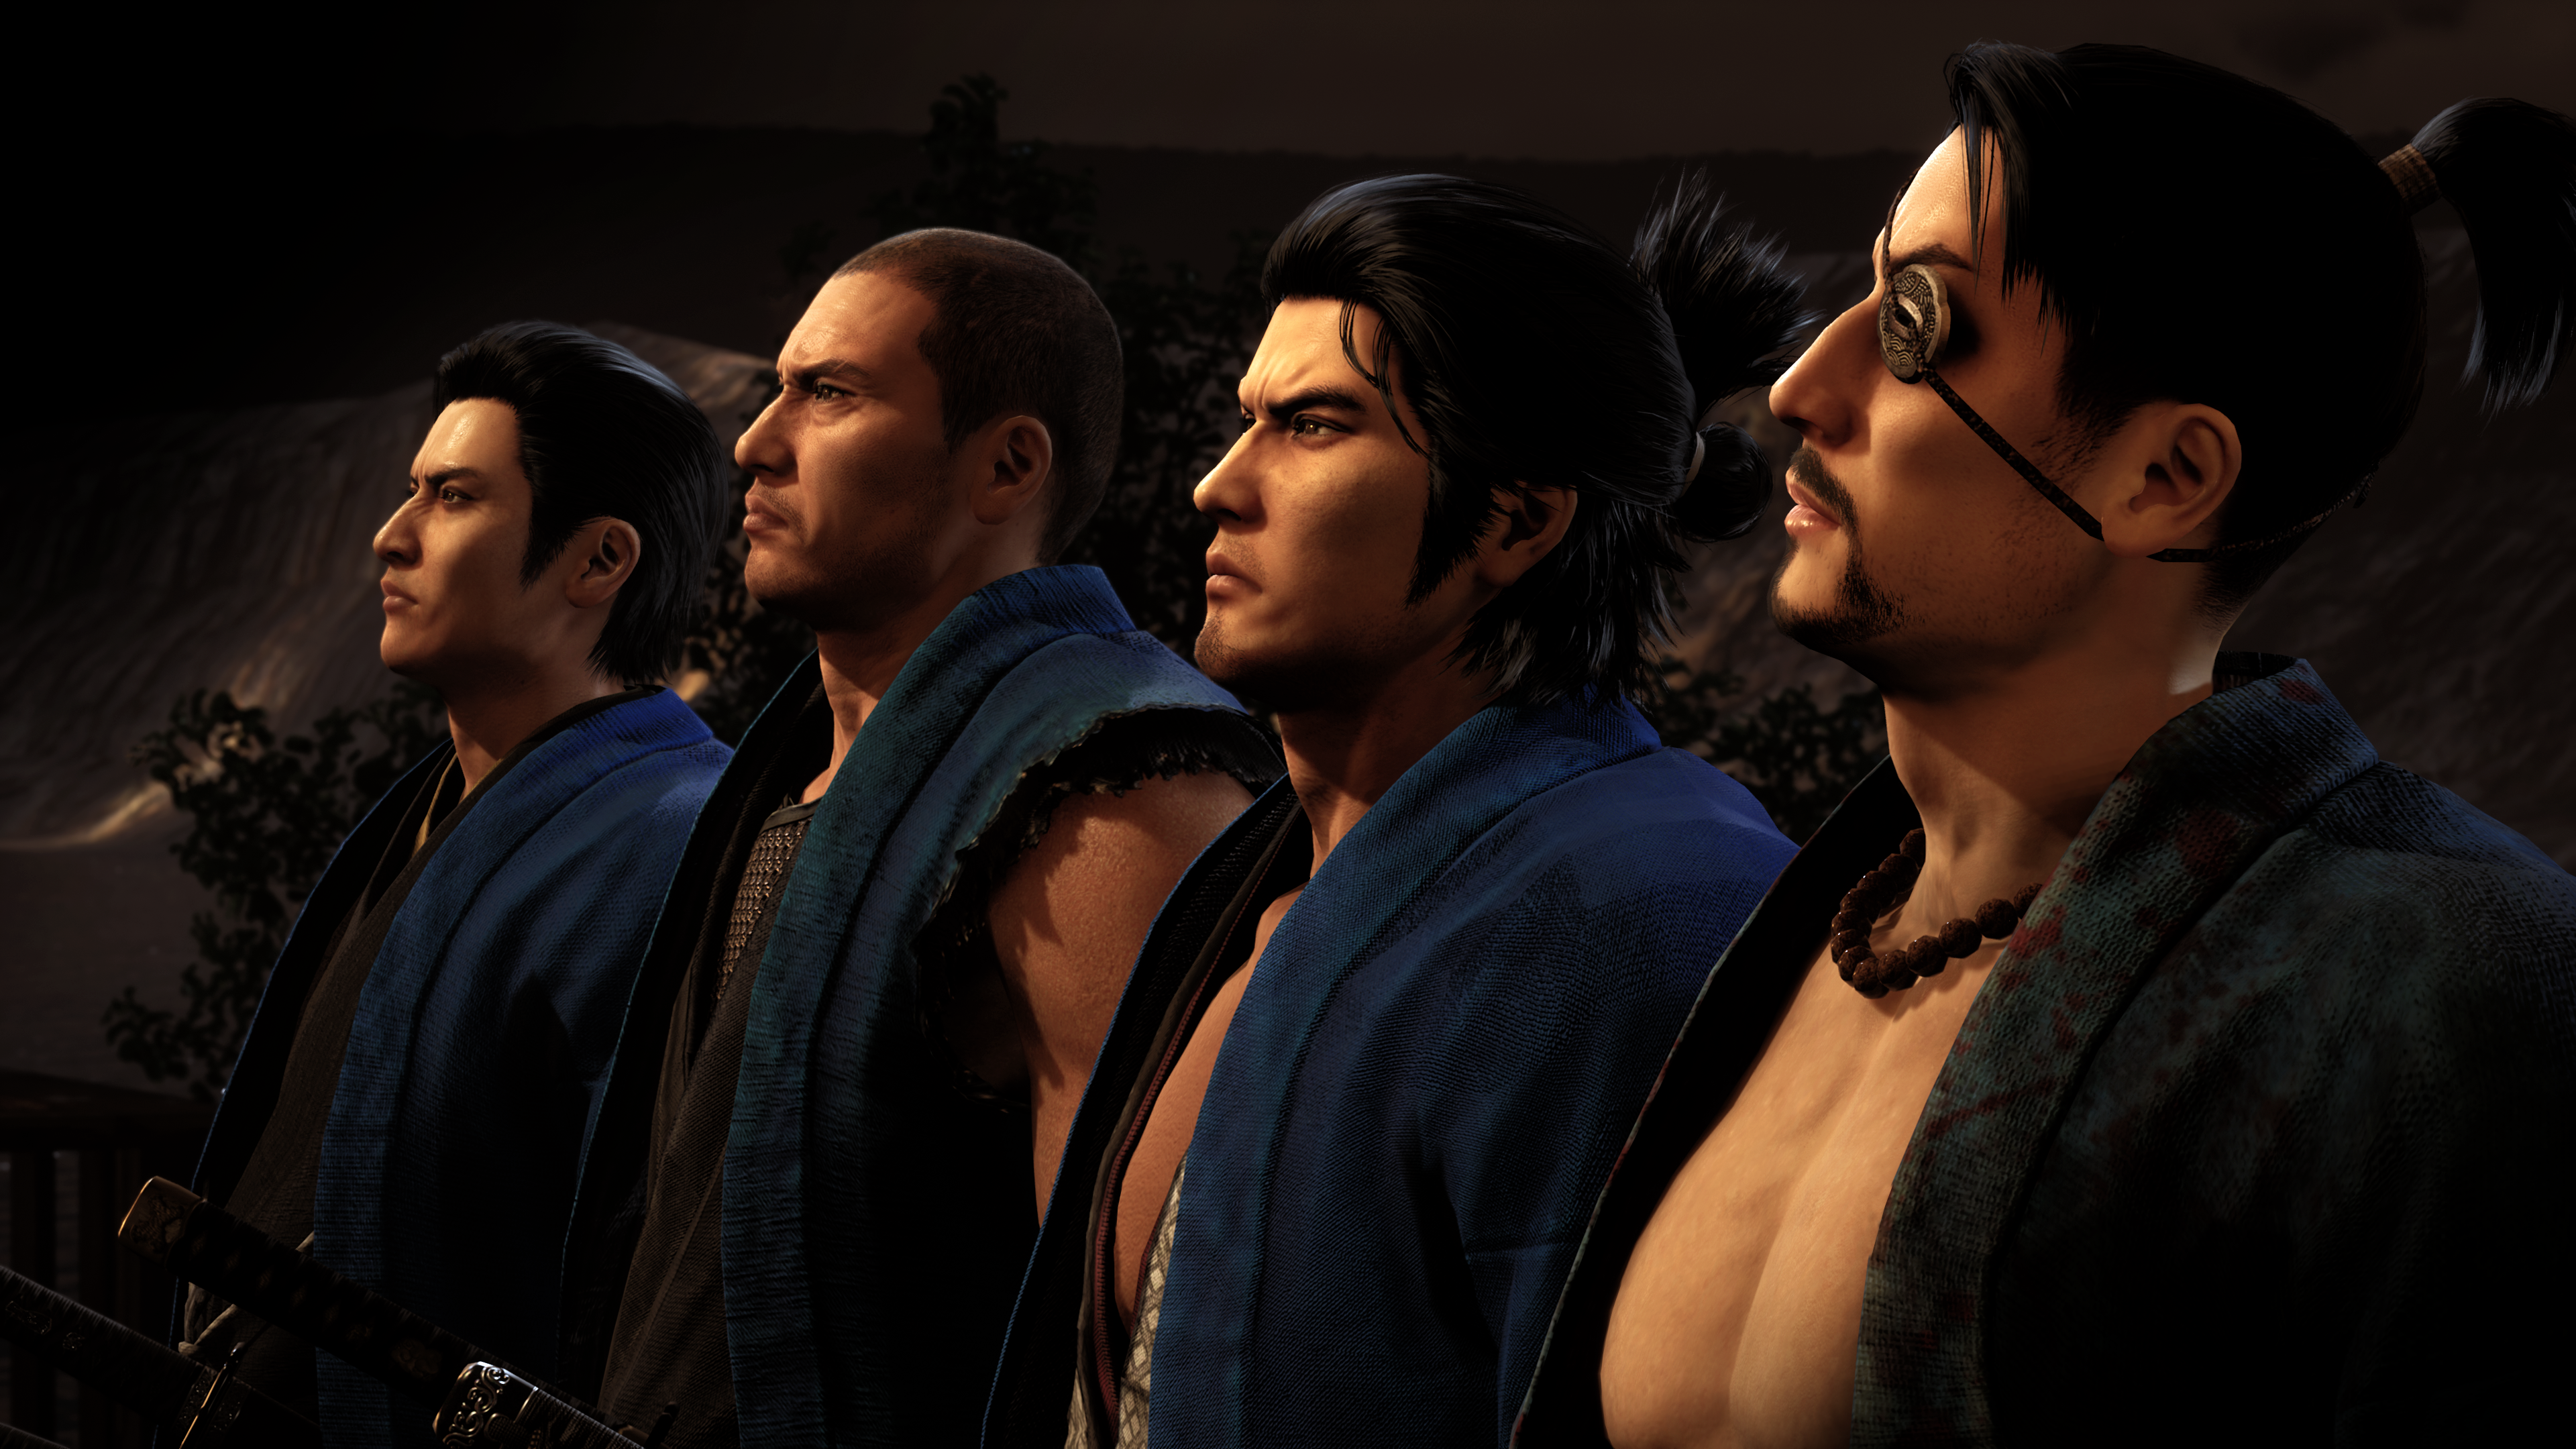 A shot of 4 members of the Sinsengumi wearing blue uniforms. From Left to right: Hijikata Toshizo (modeled after Yoshitaka Mine), Nagakura Shinpachi (modeled after Taiga Saejima), Sakamoto Ryoma (modeled after Kazuma Kiryu), Okita Soji (modeled after Goro Majima)